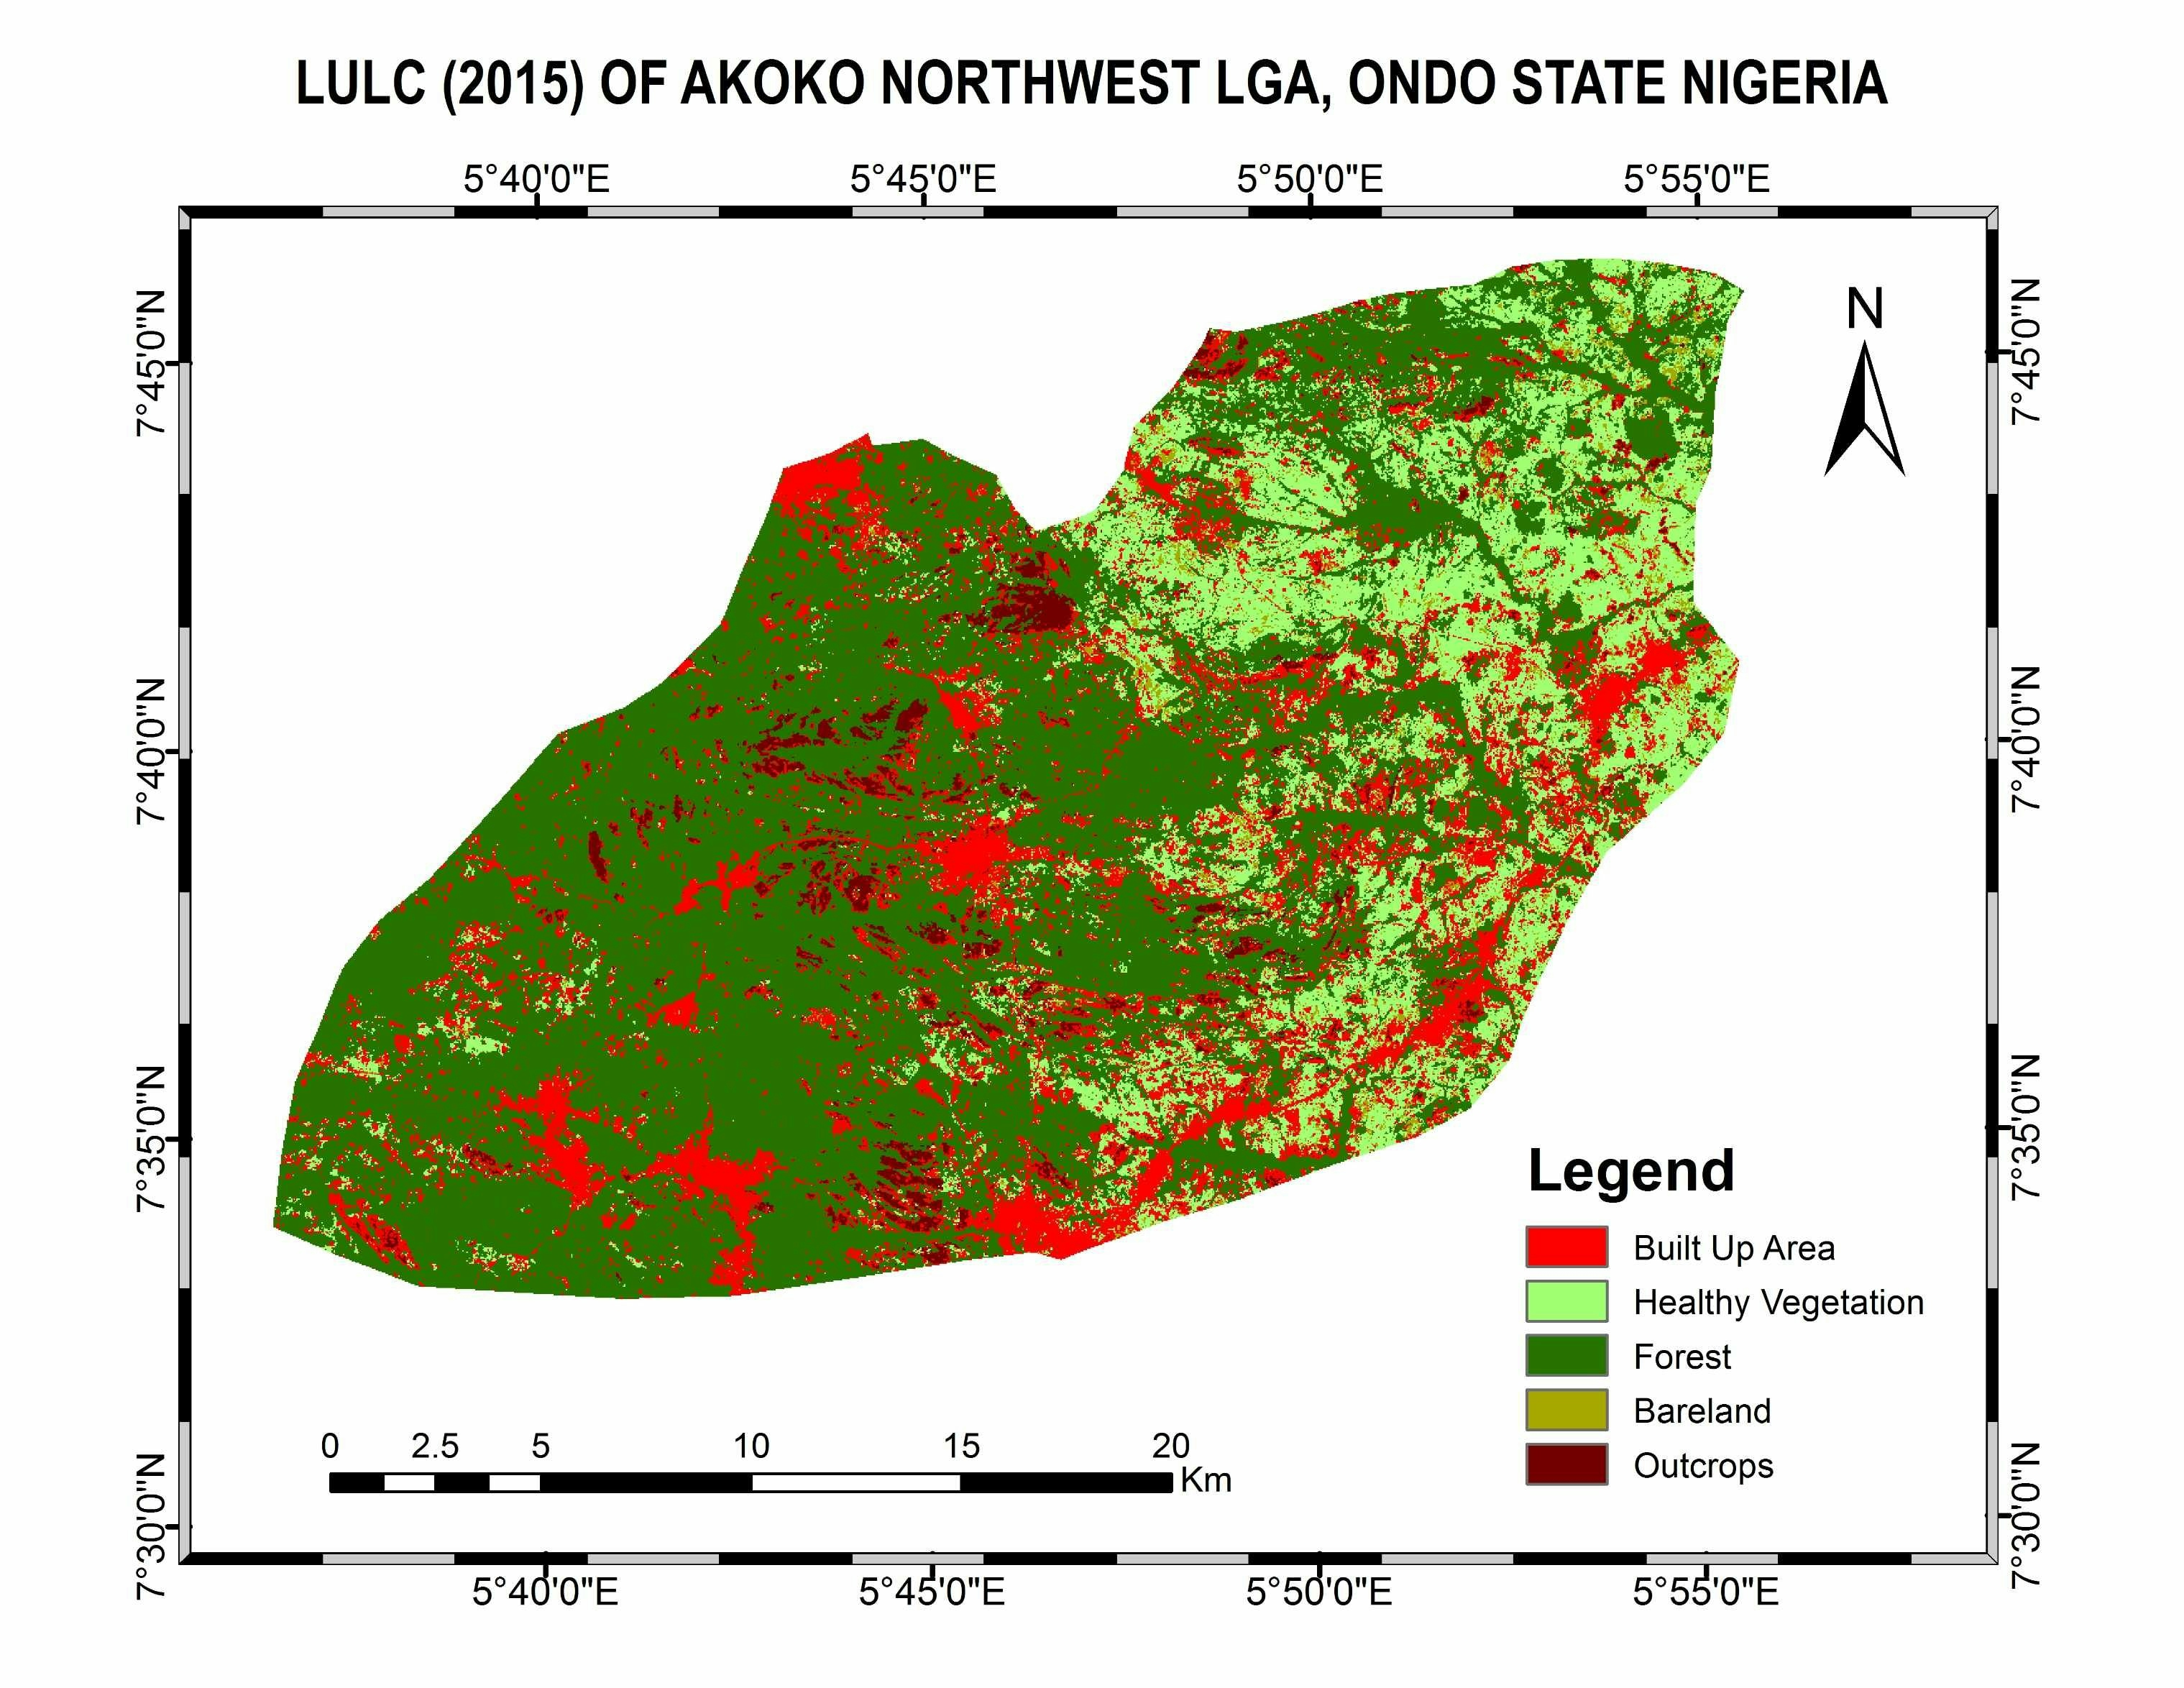 (LULC) Akoko NW Ondo State Nigeria 2015